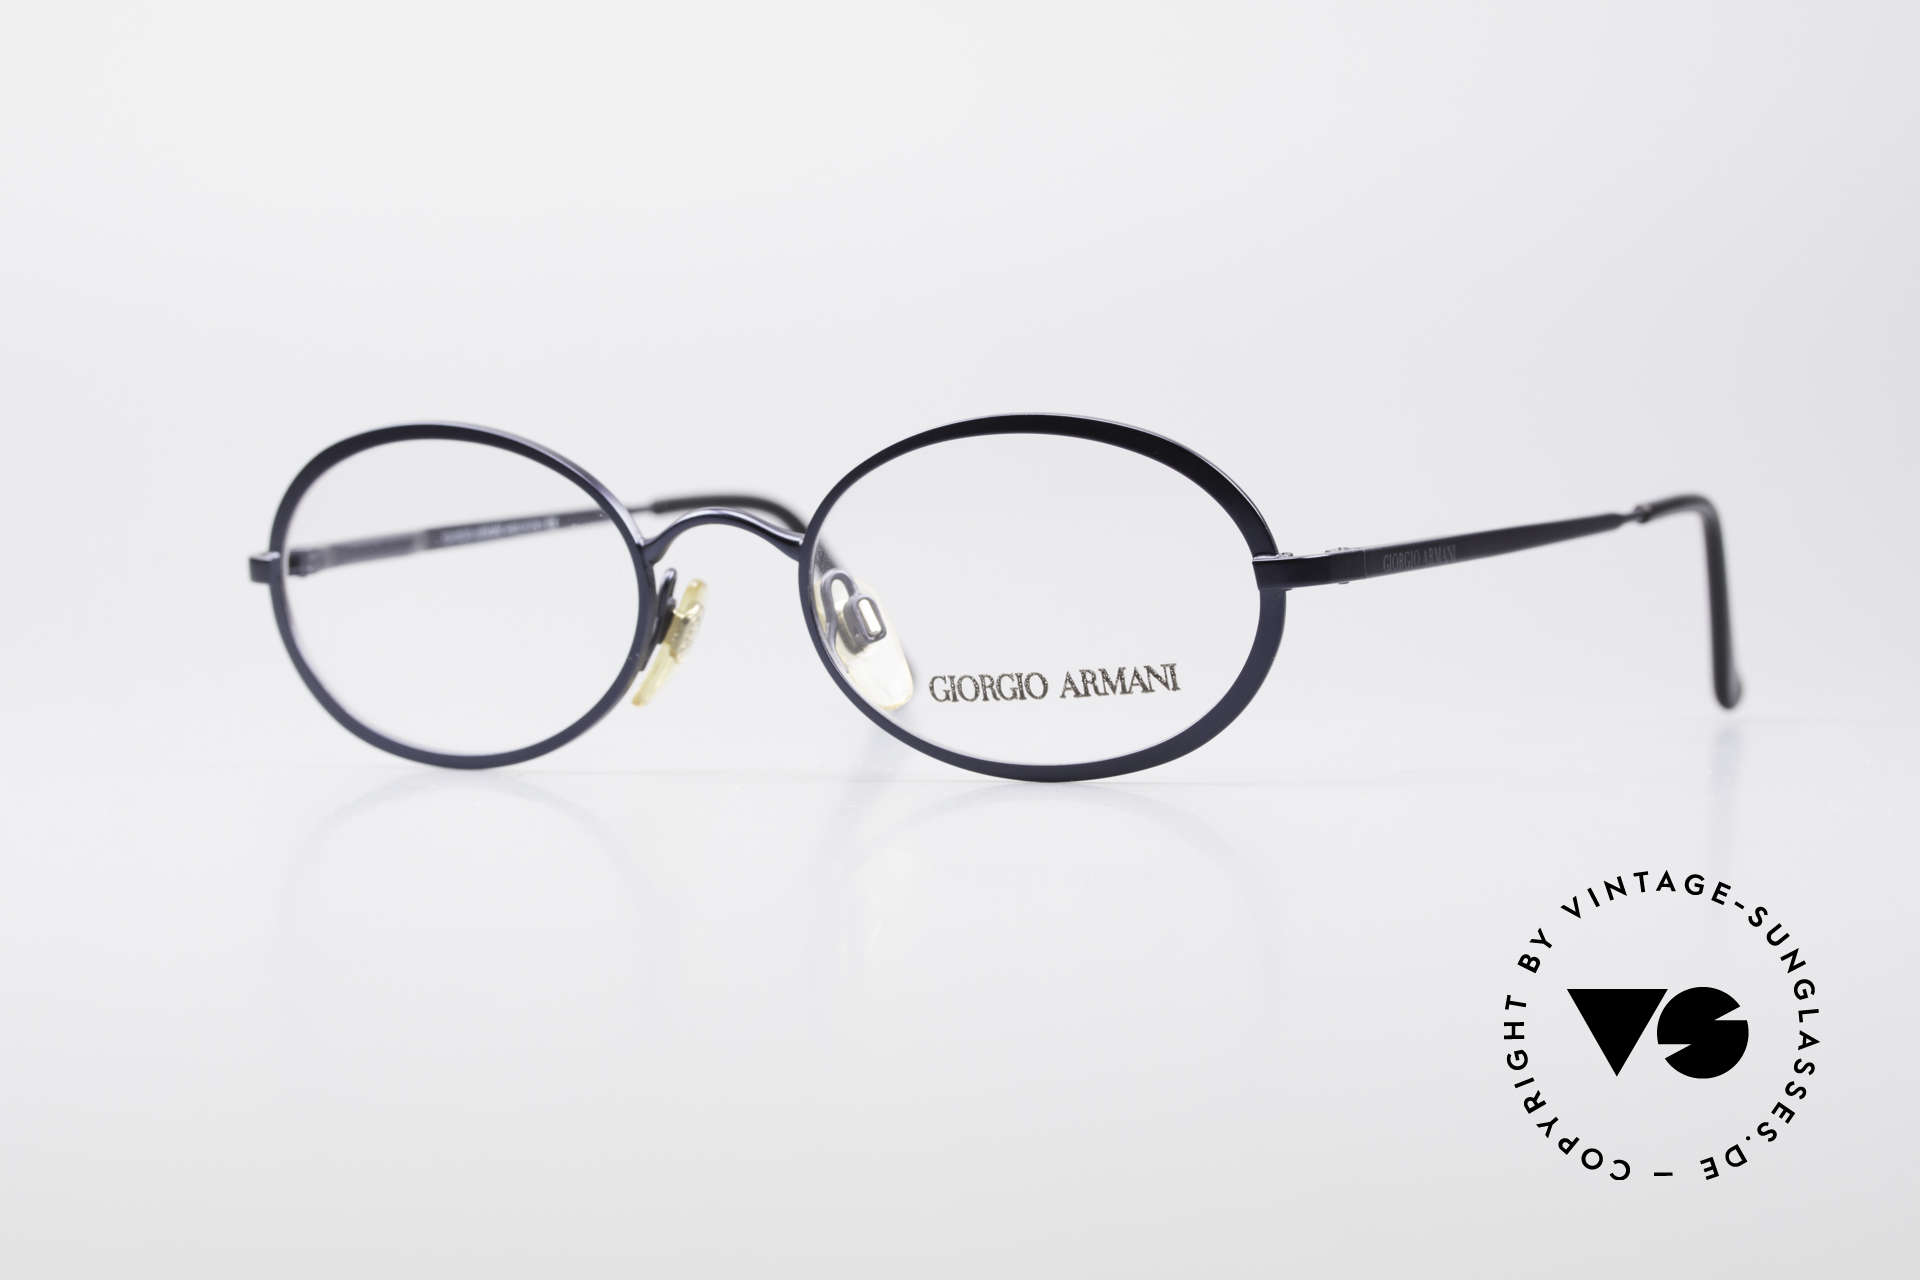 Giorgio Armani 277 90's Oval Vintage Eyeglasses, oval designer eyeglass-frame by GIORGIO ARMANI, Made for Men and Women